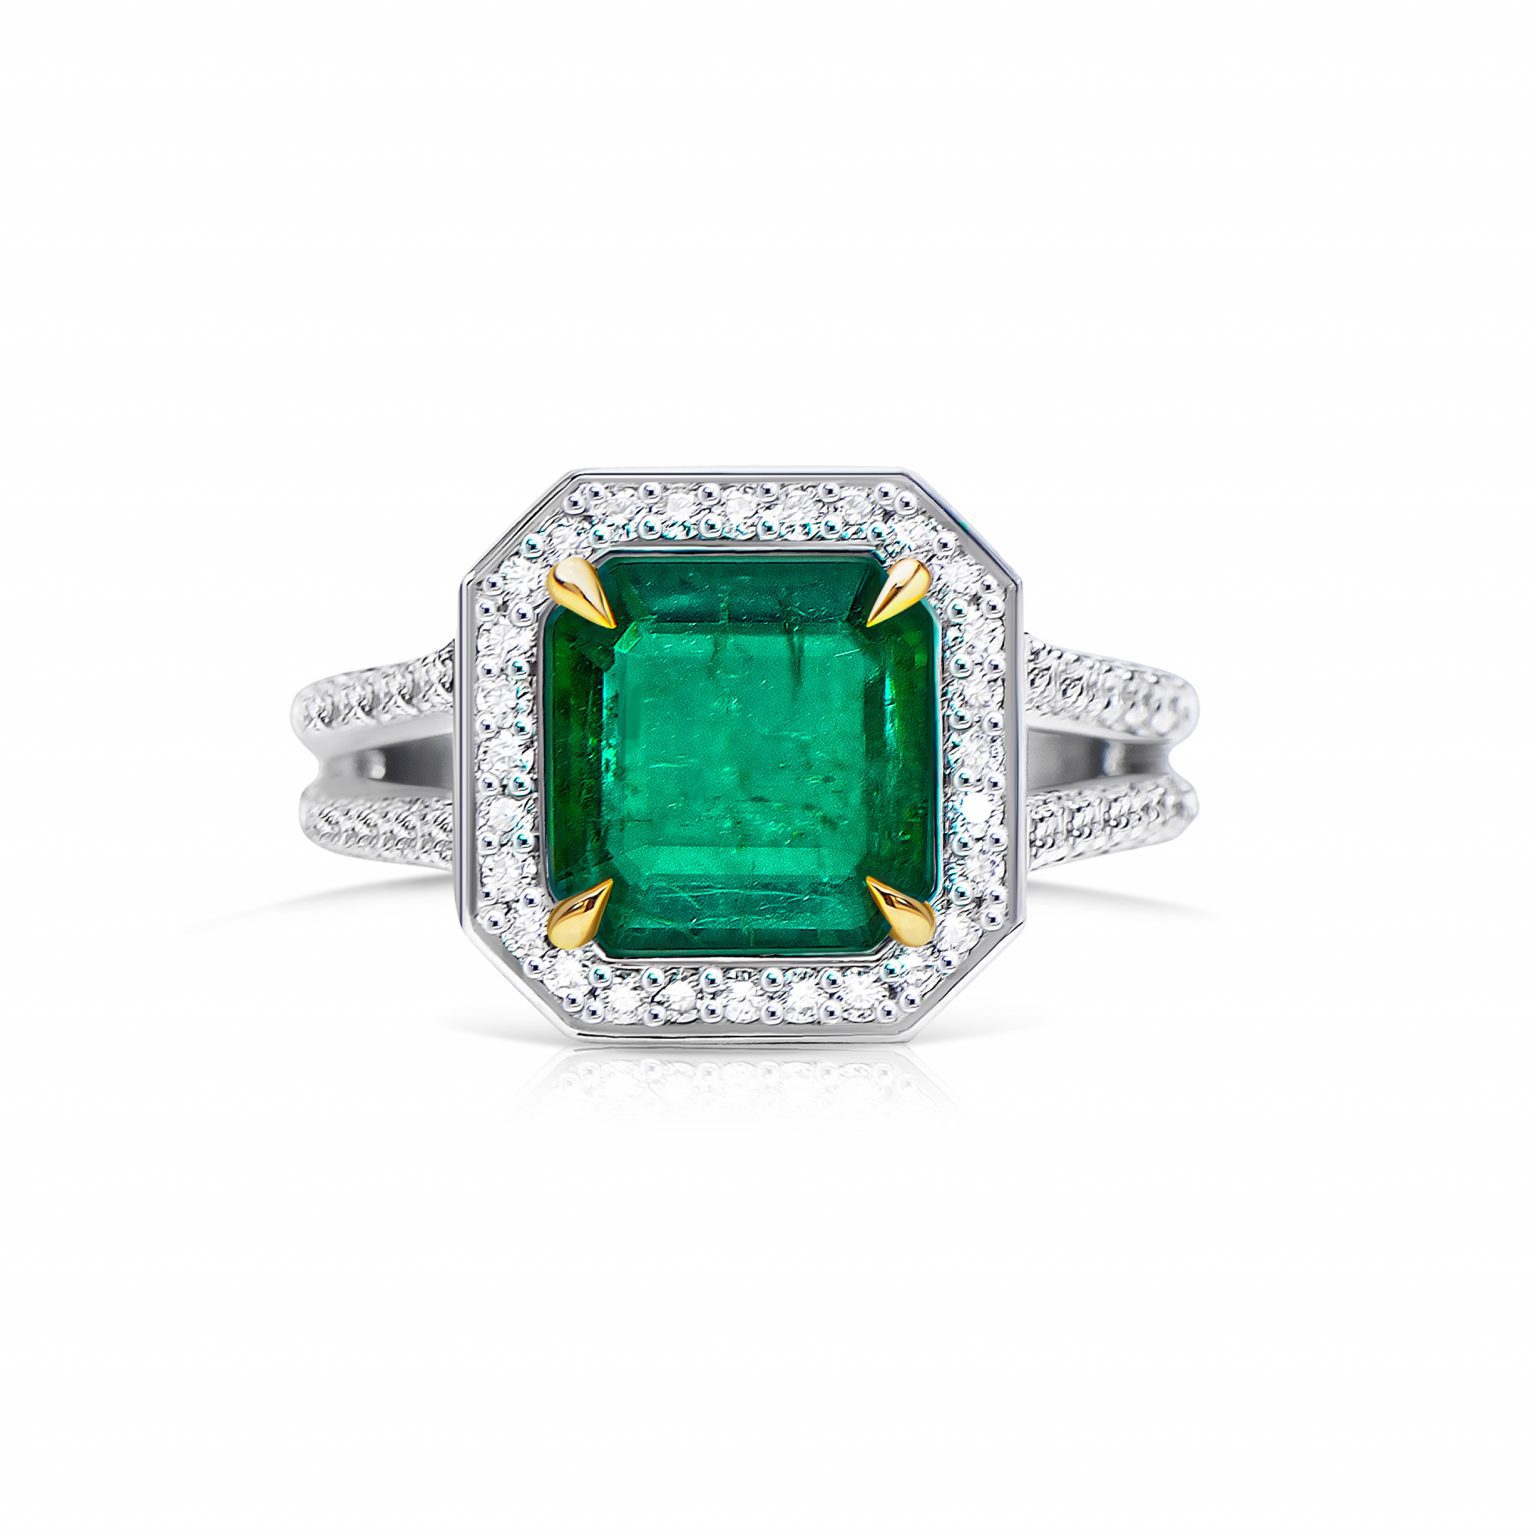 3.19 ct Vivid Green Emerald Ring